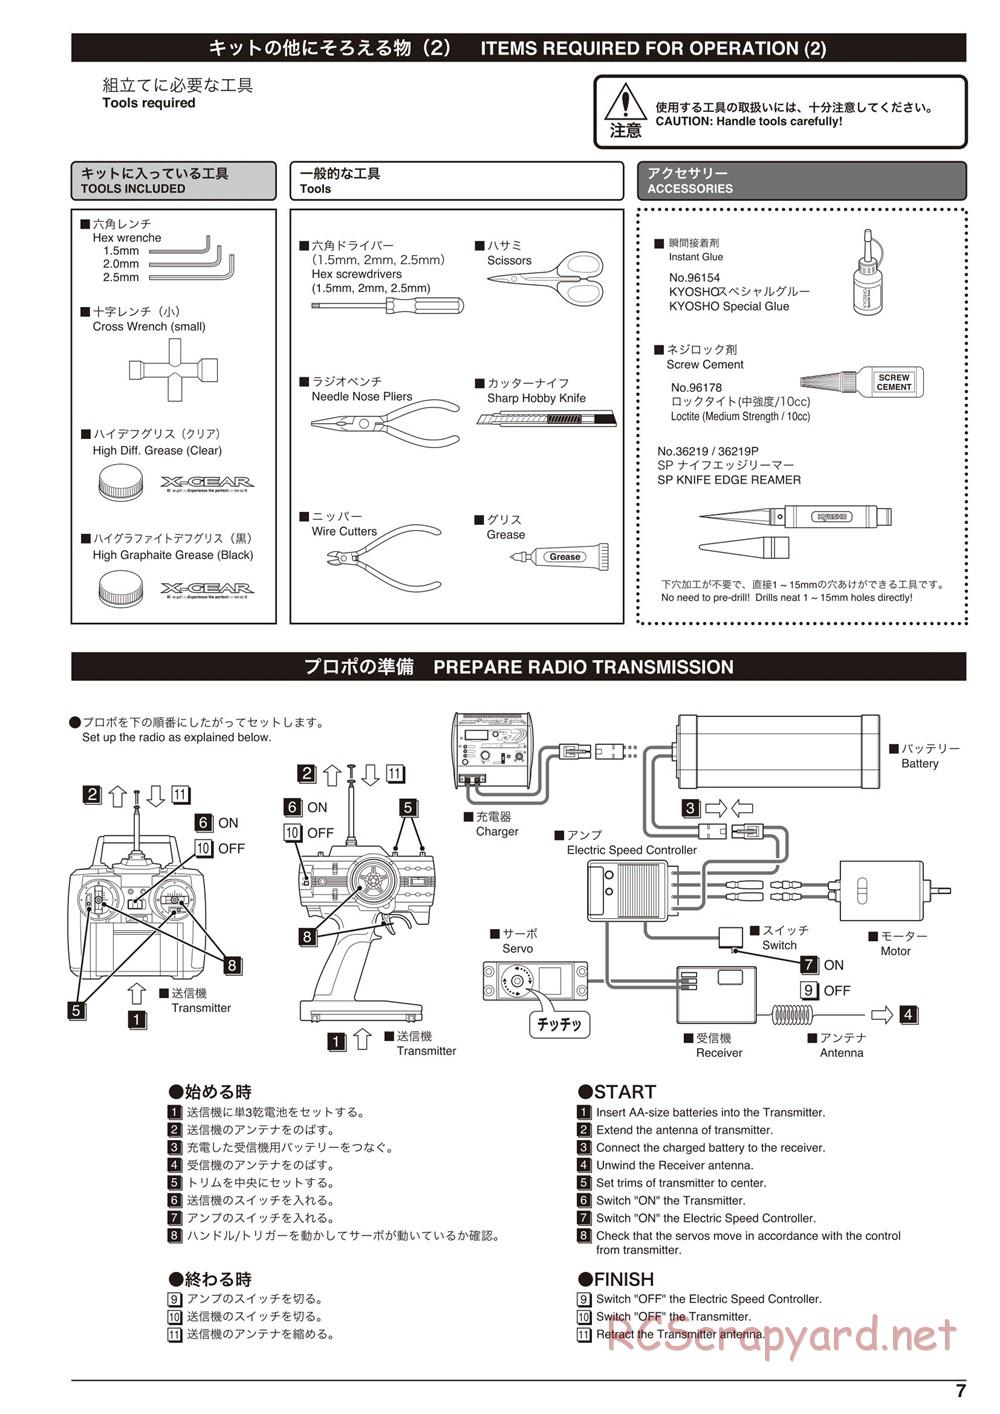 Kyosho - Ultima SC6 - Manual - Page 7